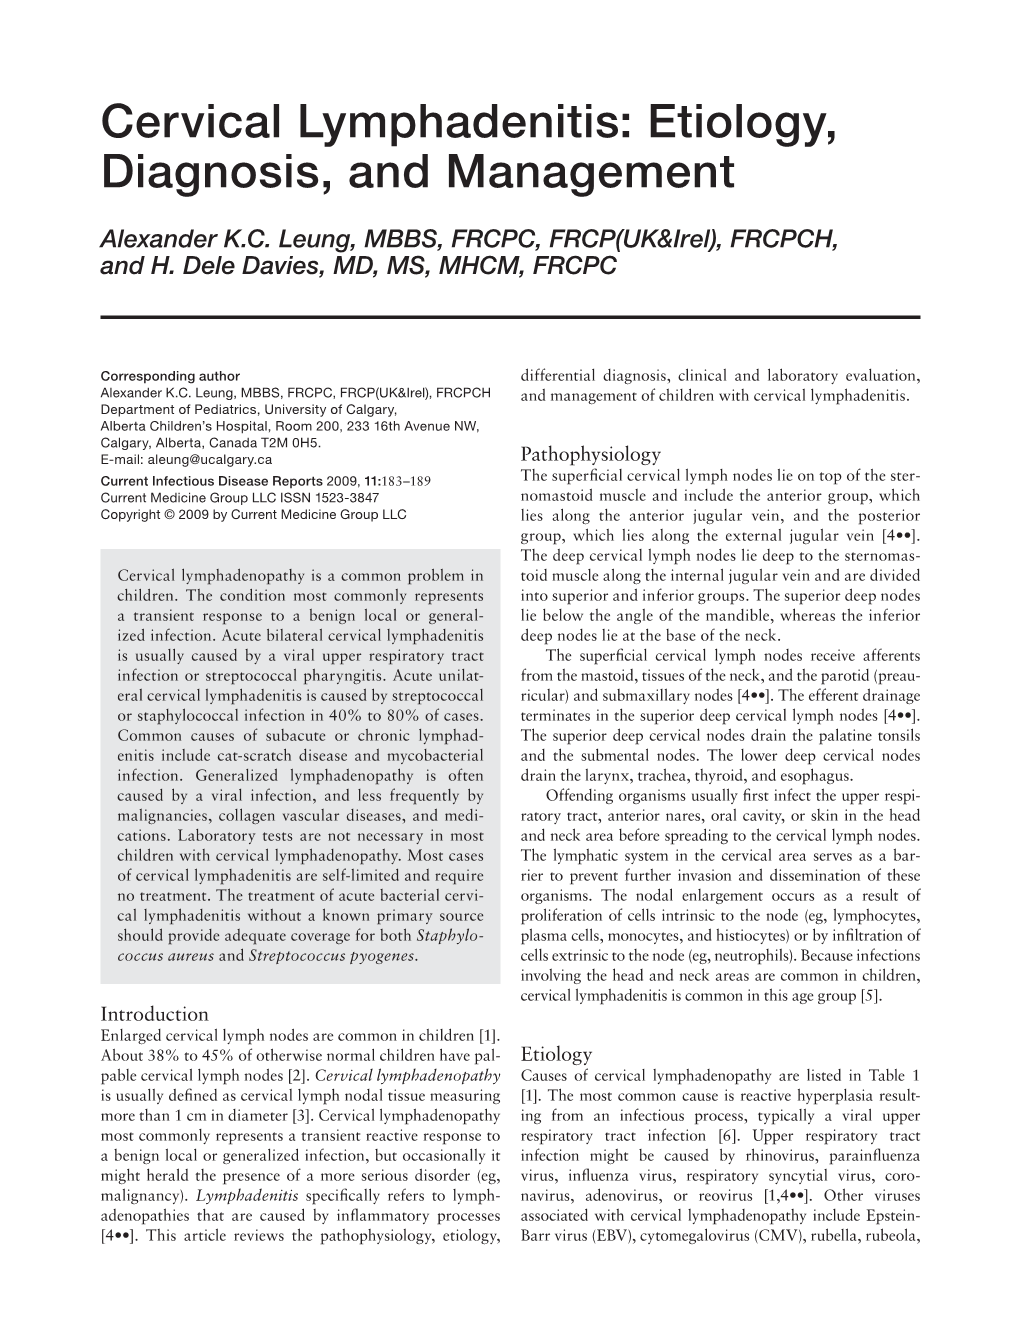 Cervical Lymphadenitis: Etiology, Diagnosis, and Management